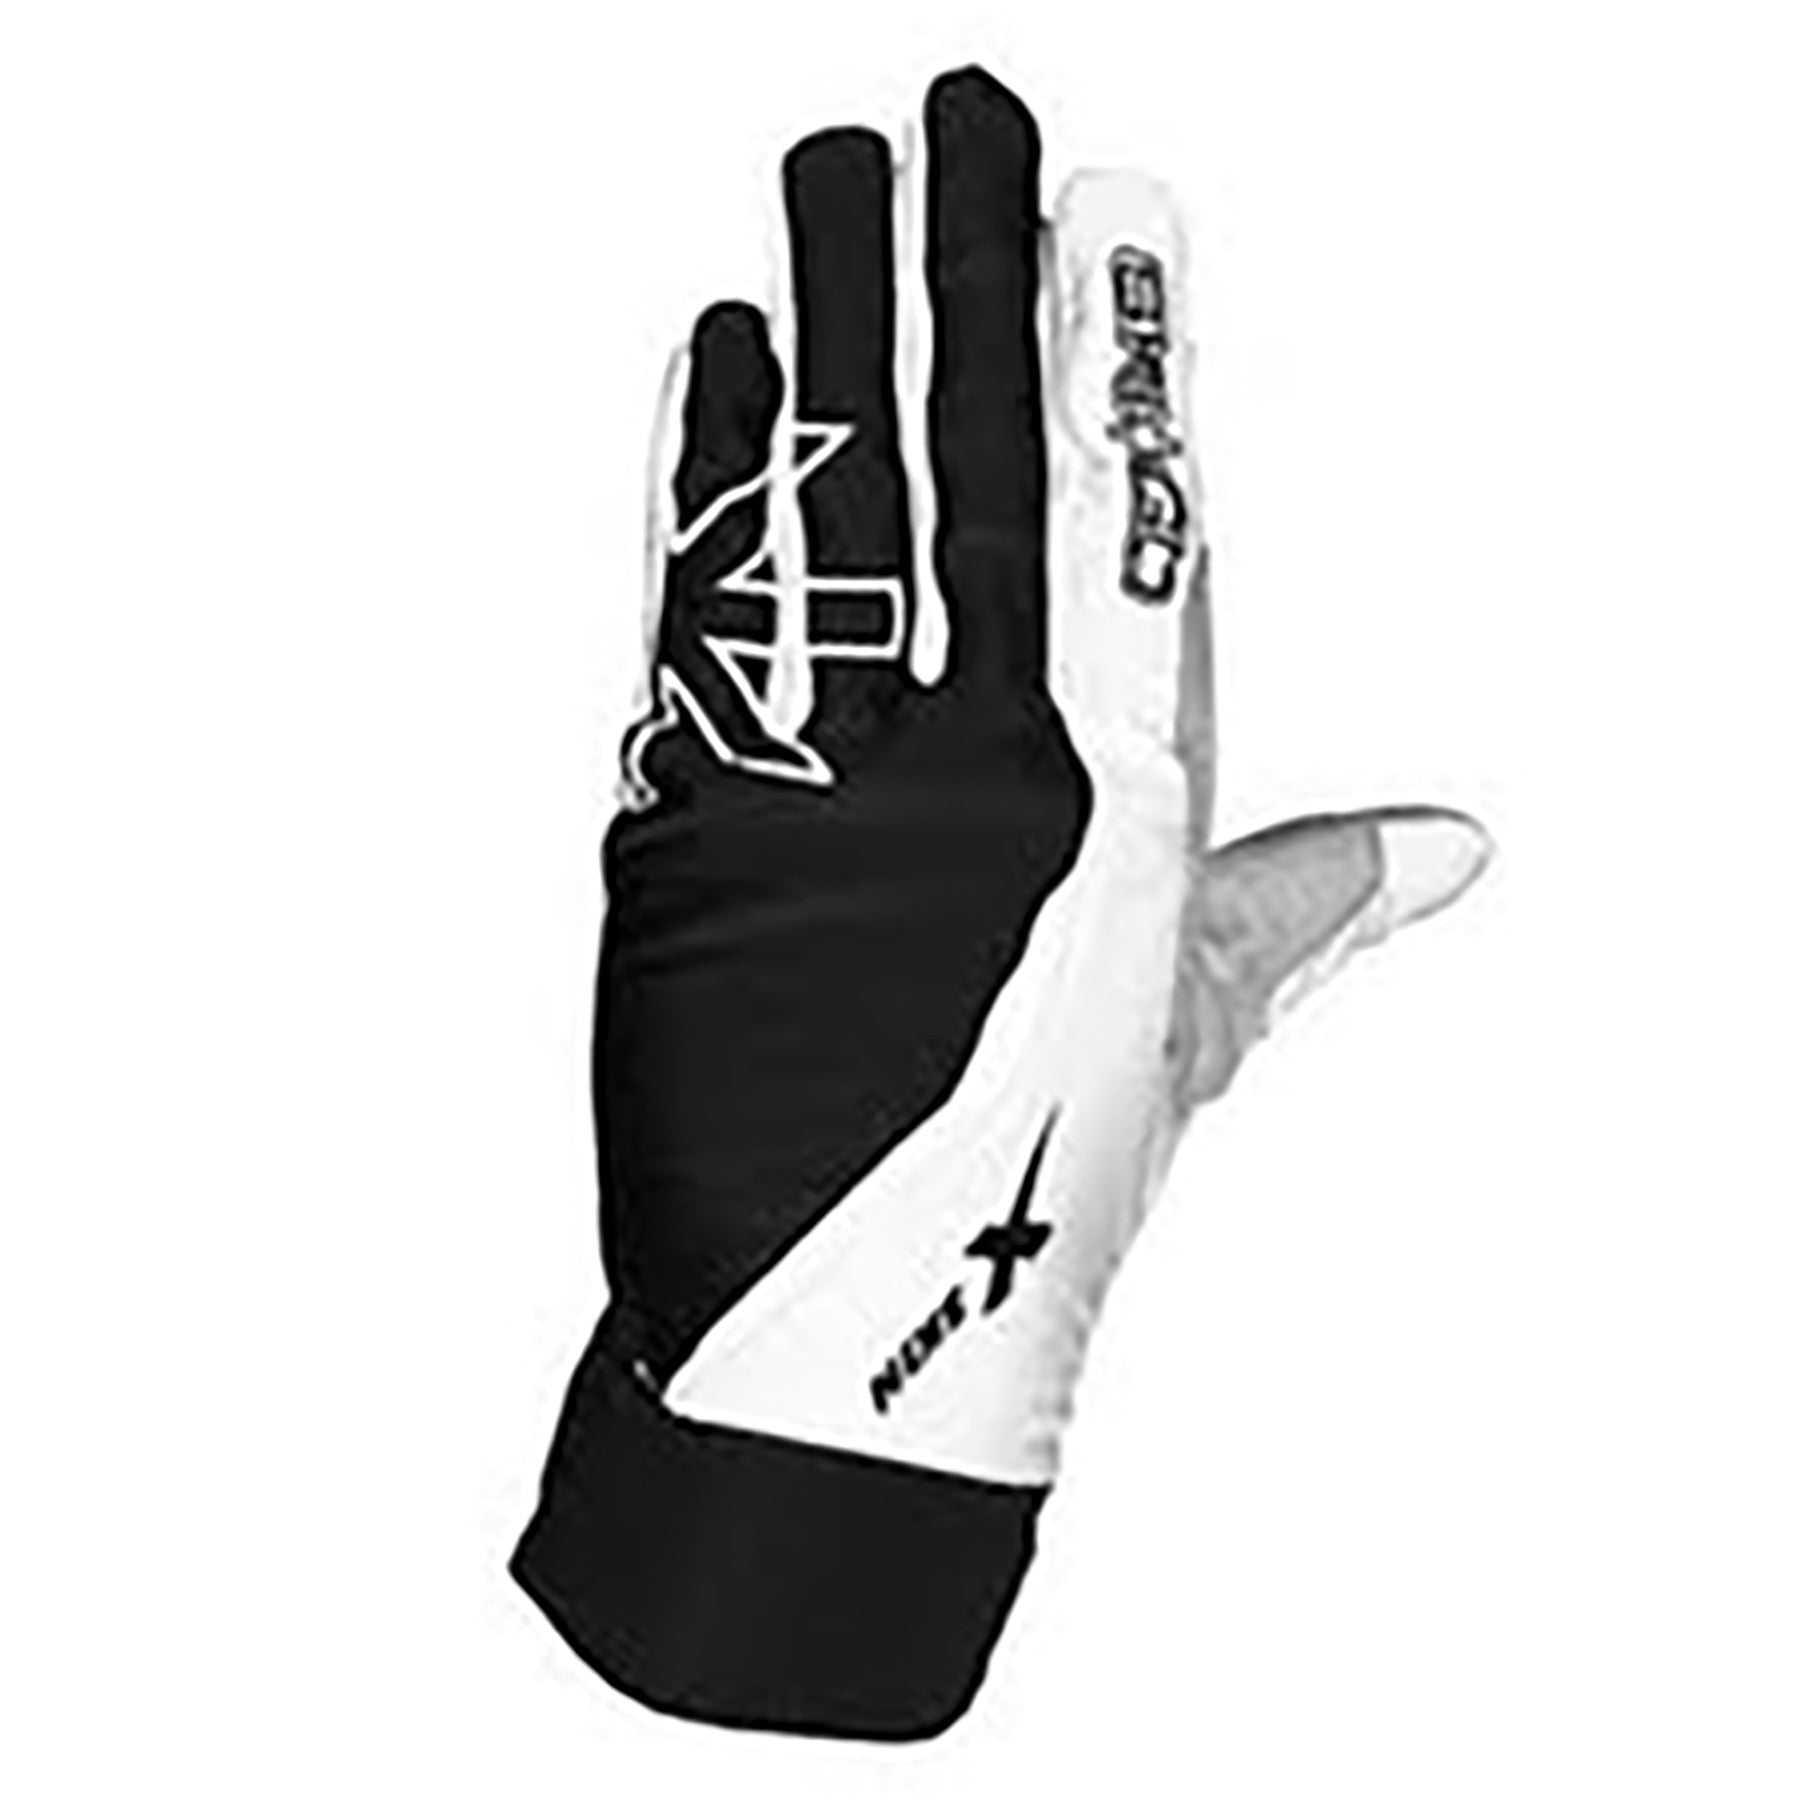 SkiGo X-skin Glove